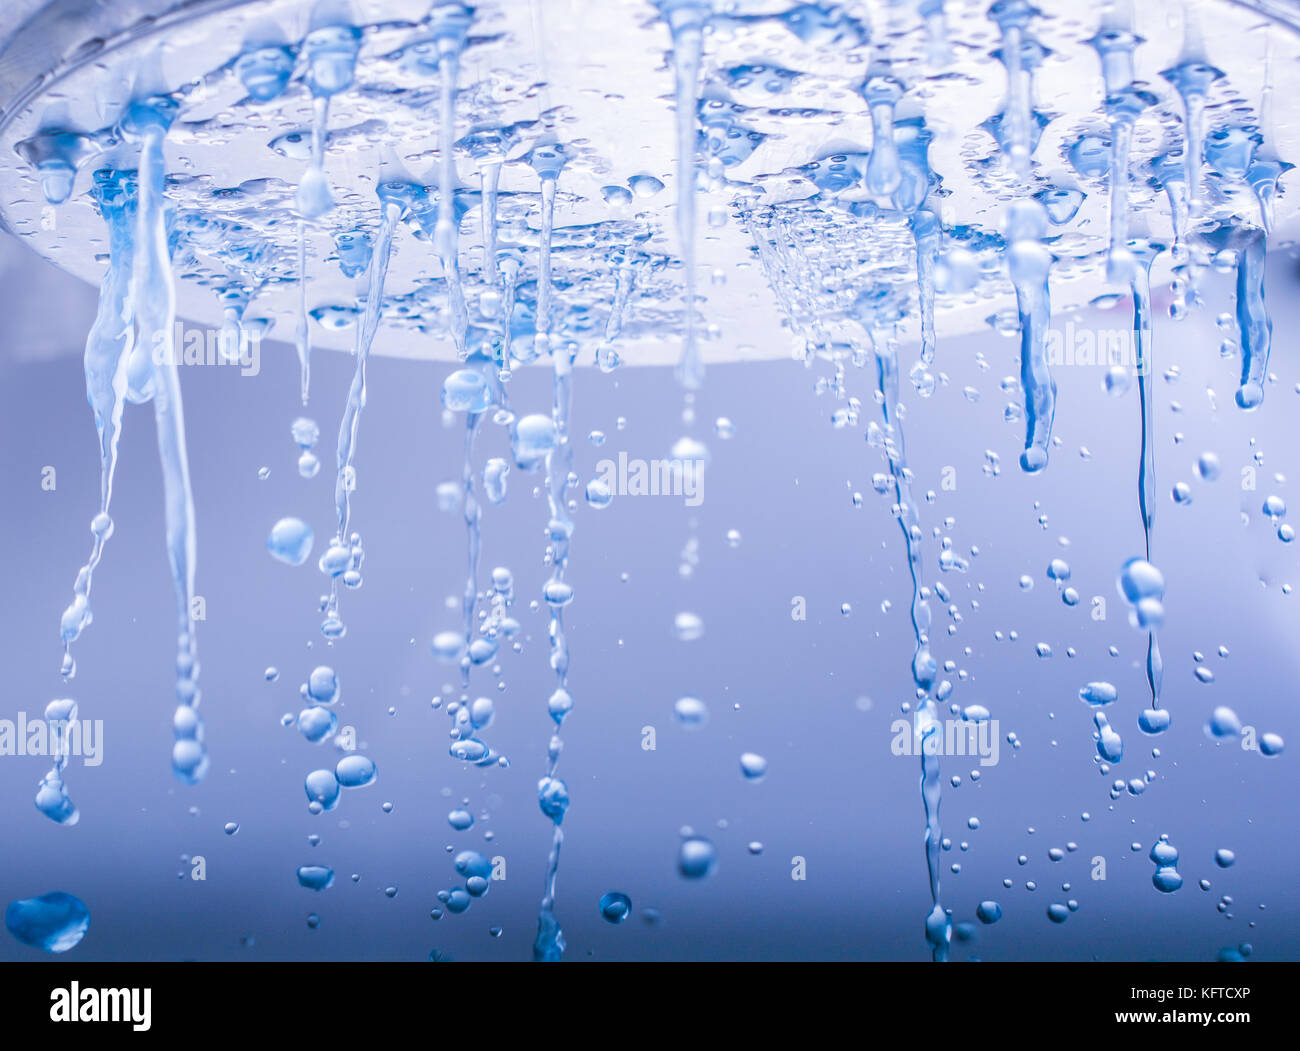 Water drops fake raining effect Stock Photo - Alamy